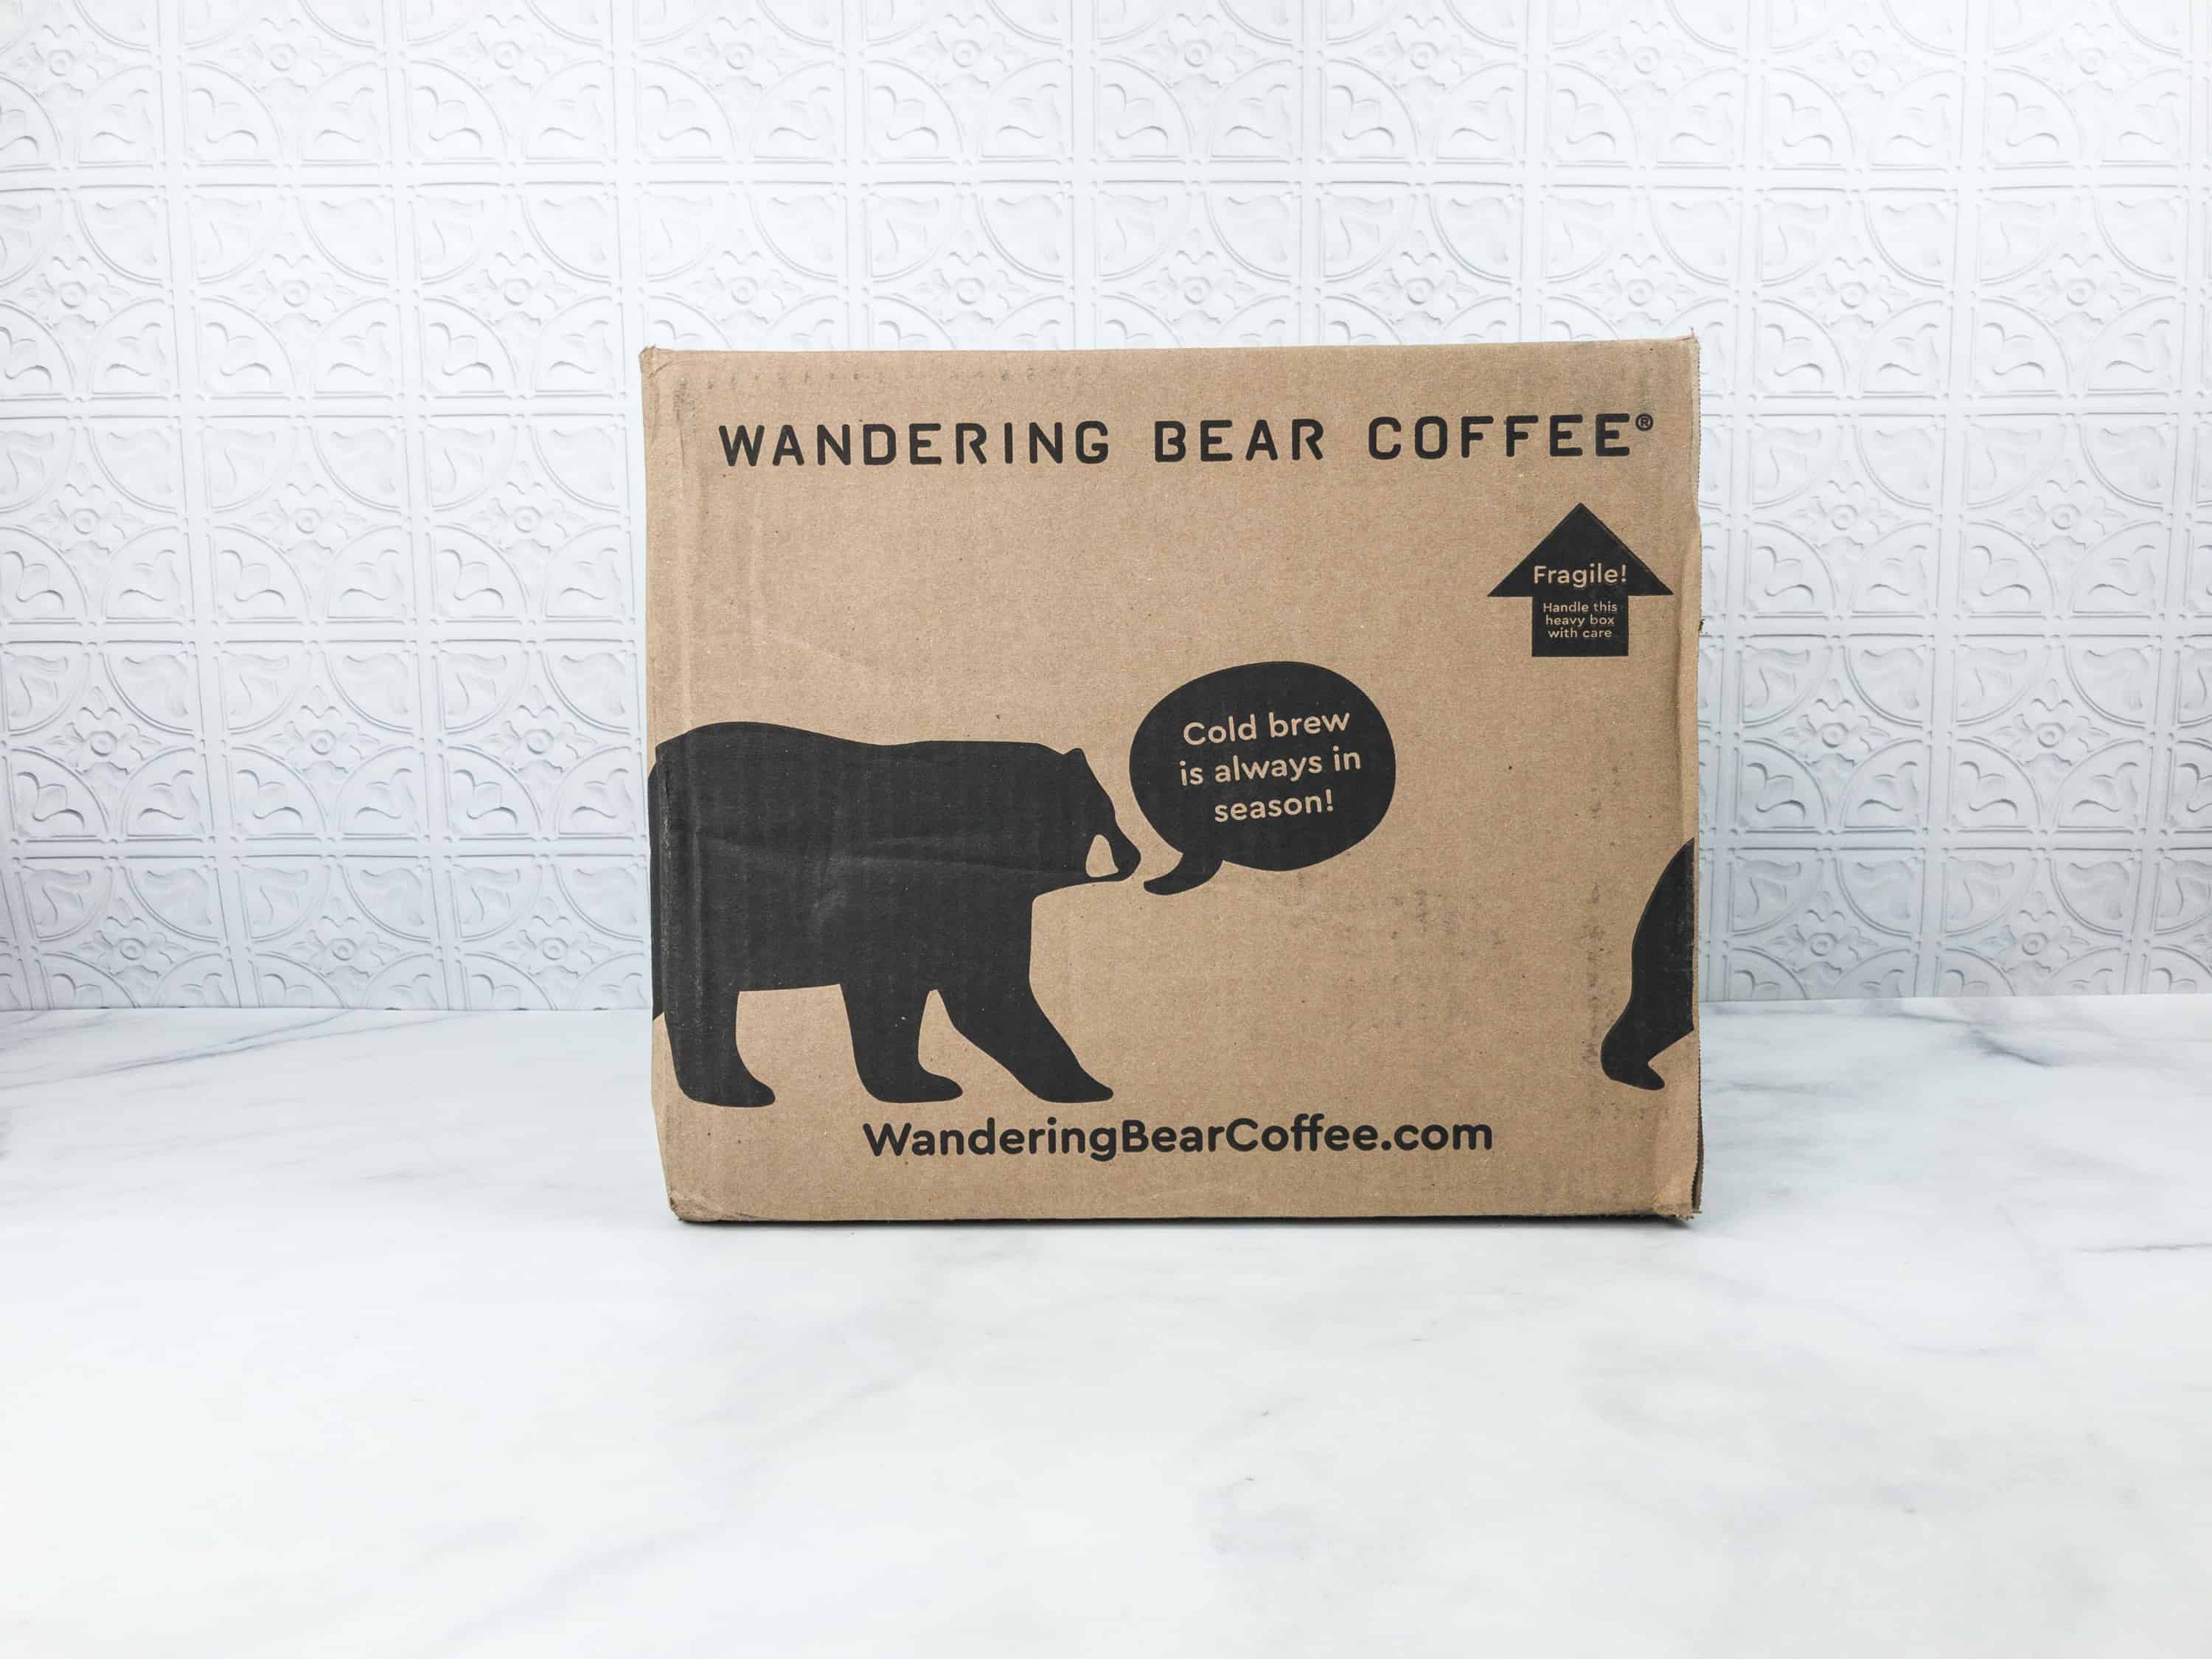 who owns wandering bear coffee